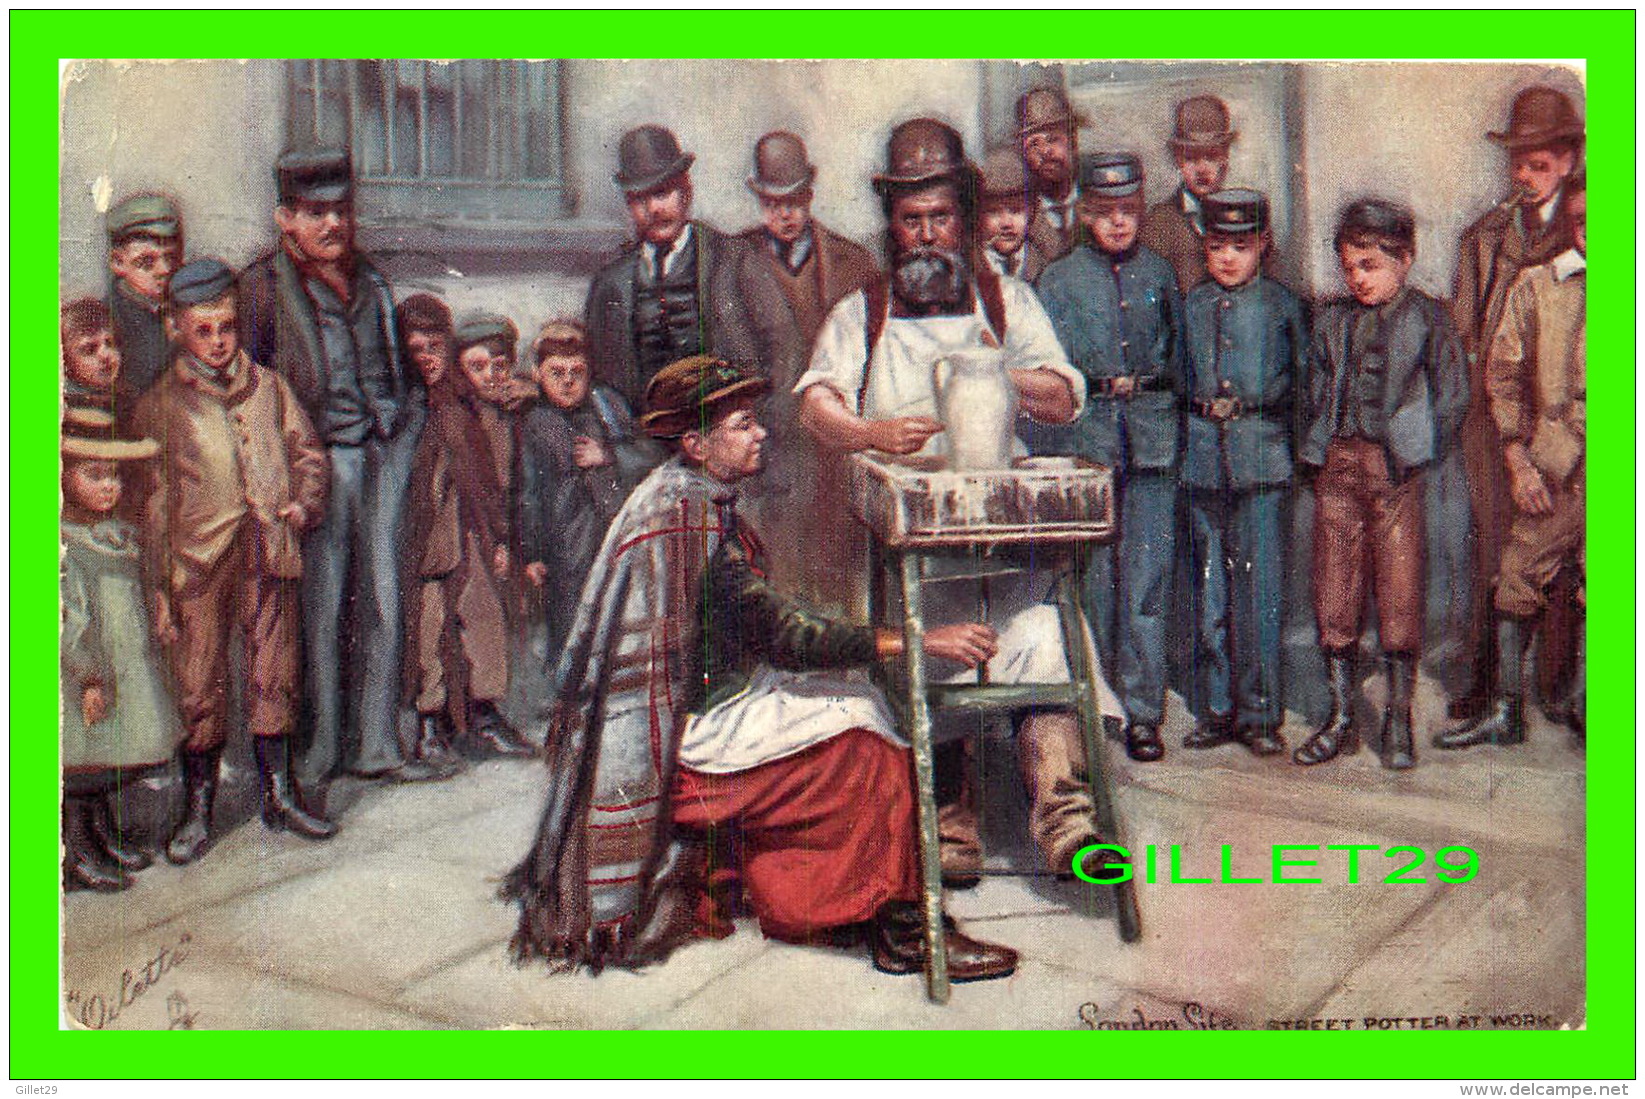 LONDON, UK - LONDON LIFE, STREET POTTER AT WORK - TRAVEL IN 1908 - RAPHAEL TUCK &amp; SONS OILETTE - - London Suburbs